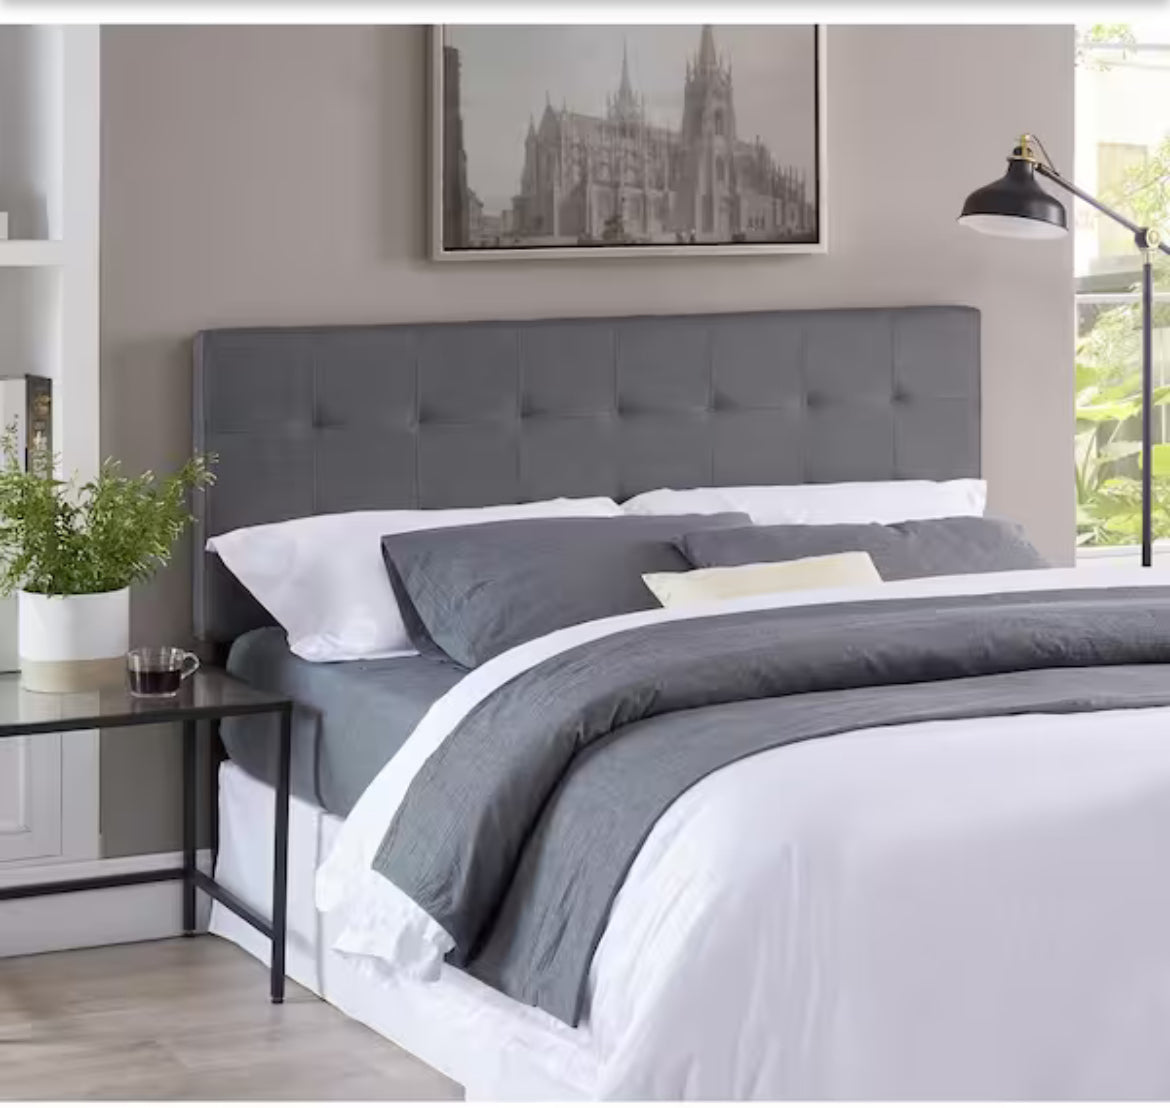 HOMESTOCK
Light Gray Headboards for Queen Size Bed, Upholstered Tufted Bed Headboard, Height Adjustable Queen Headboard